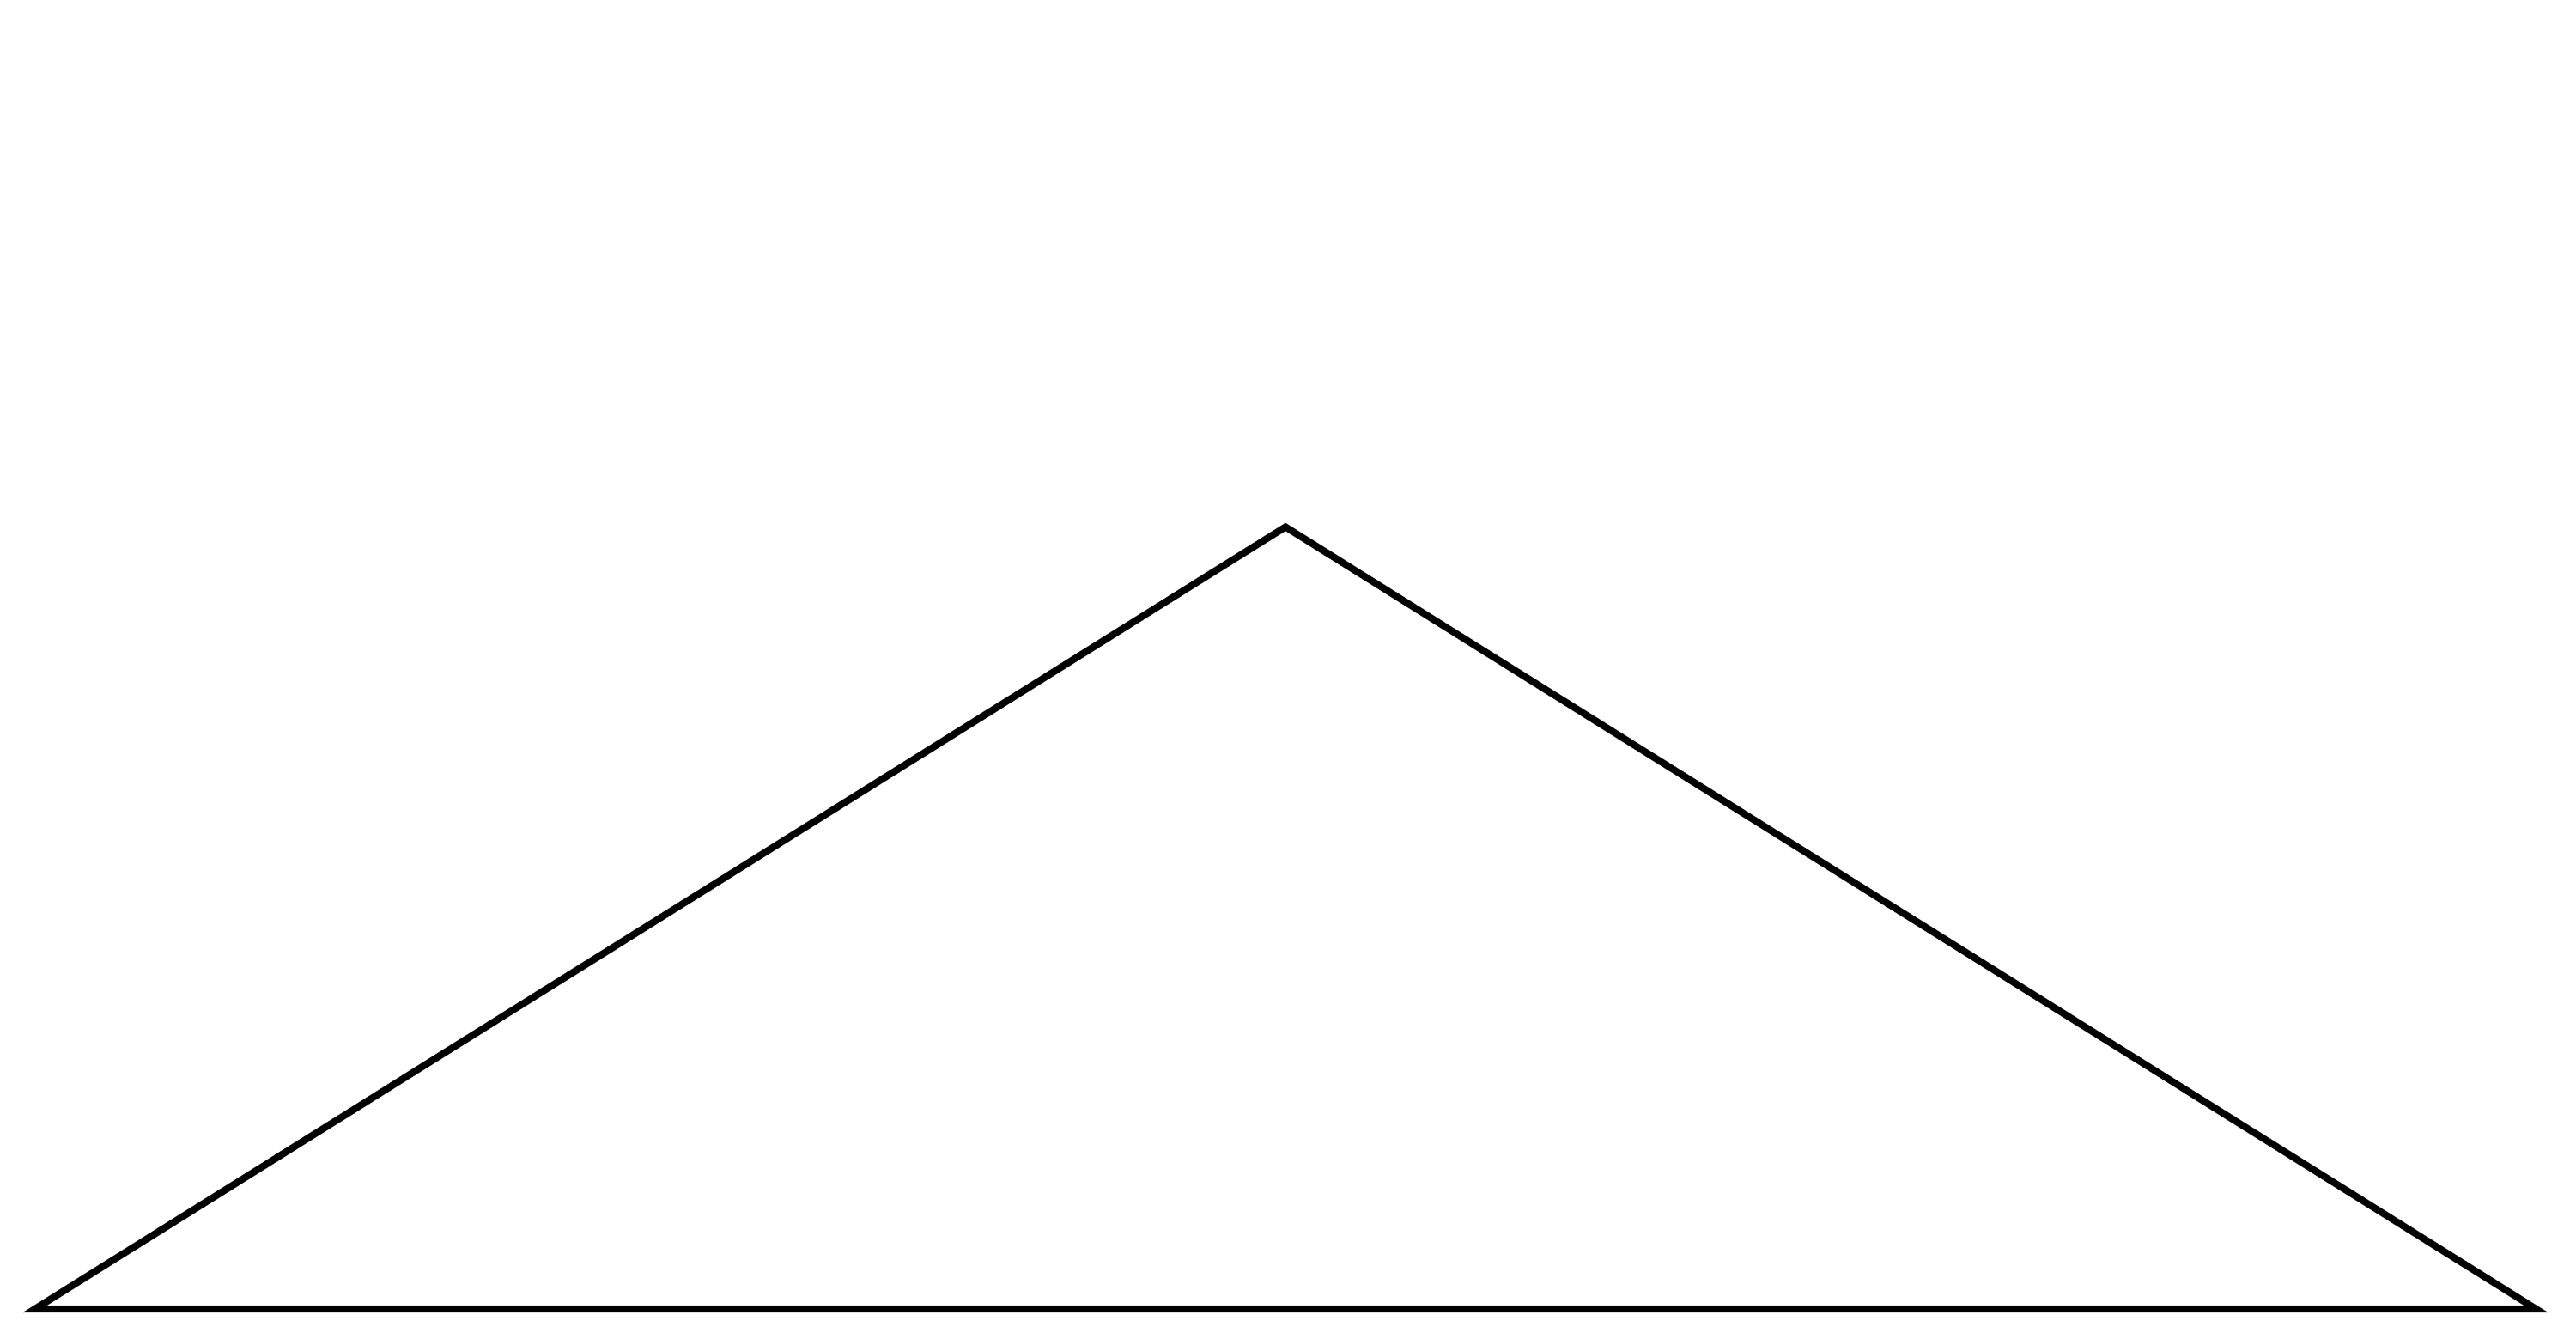 Isosceles Triangle Degrees 116 32 32